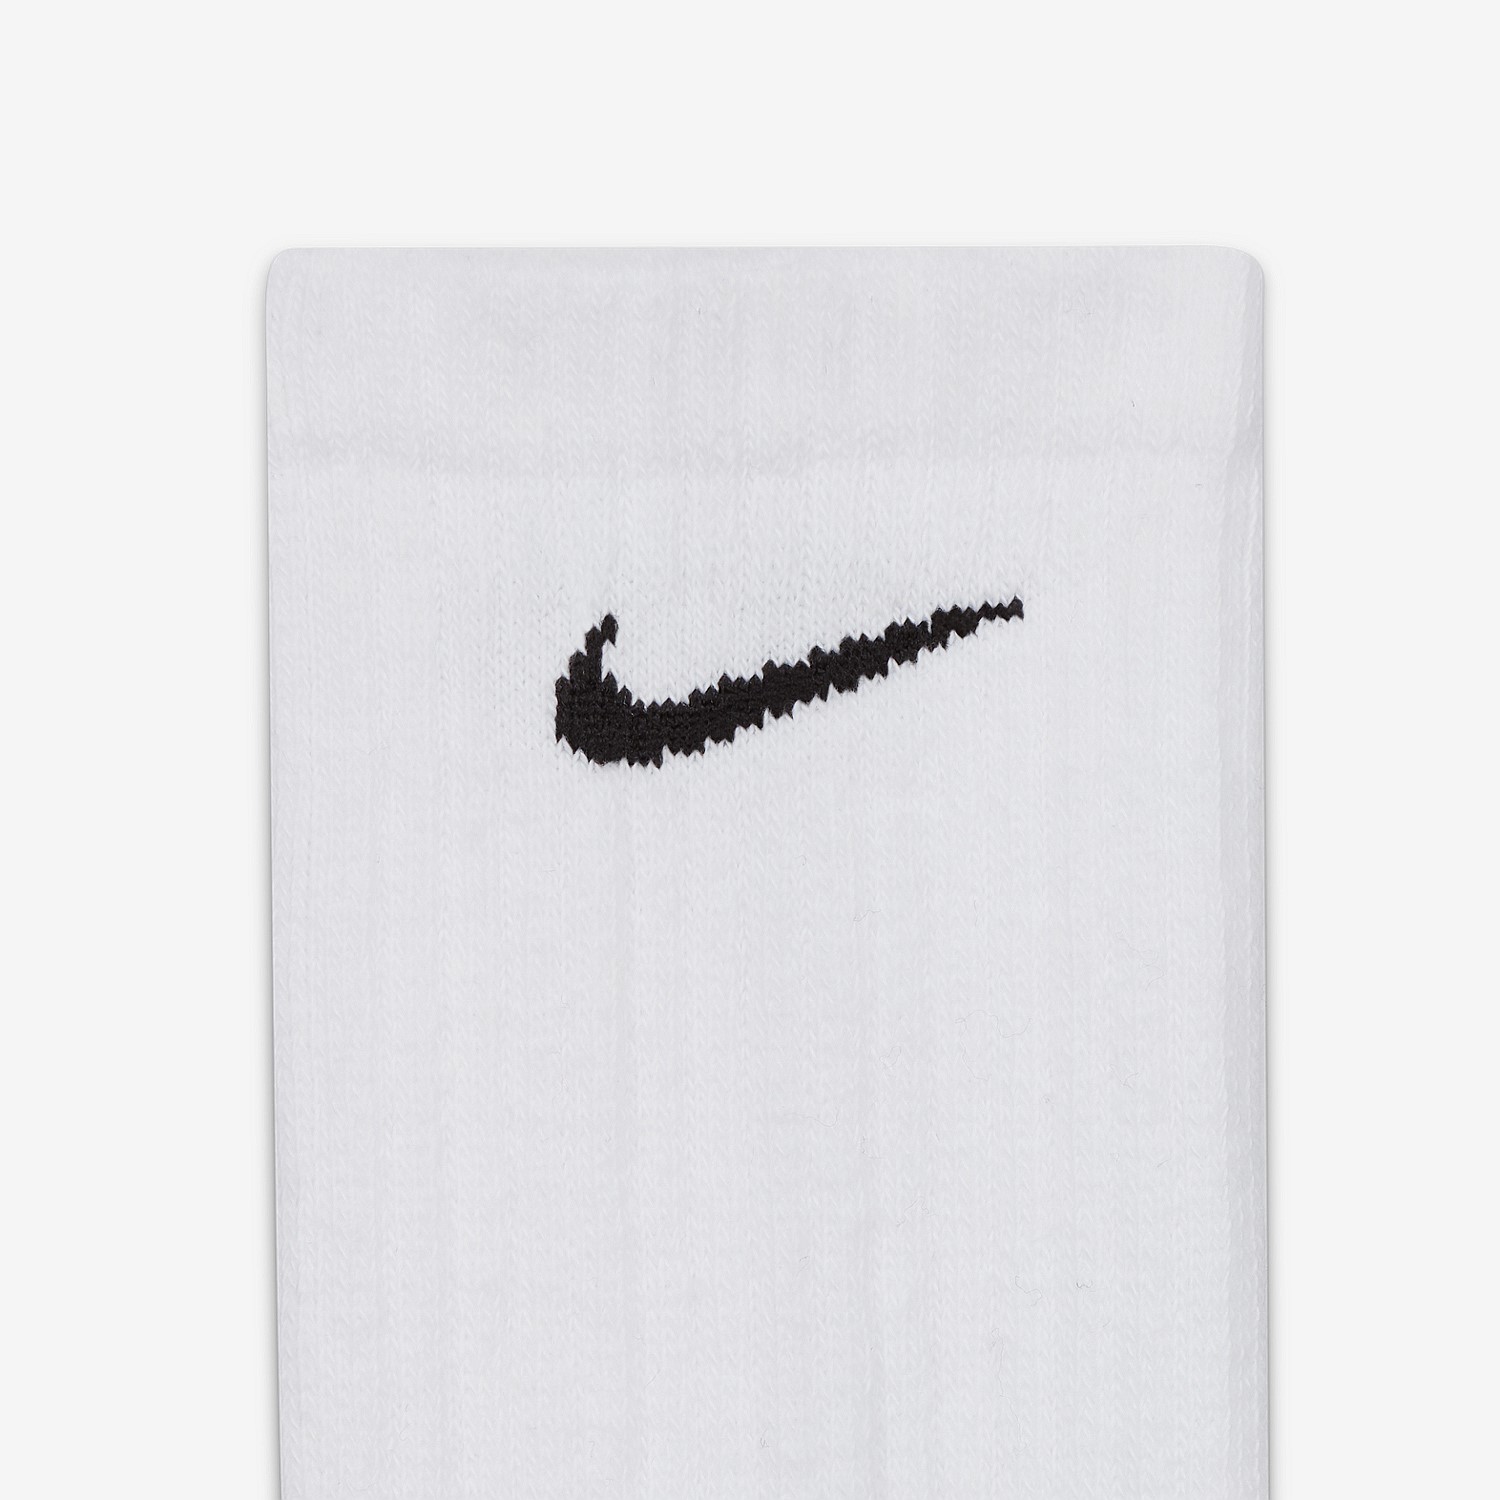 Nike Everyday Cushioned Training Crew Sock | Socks & Underwear ...